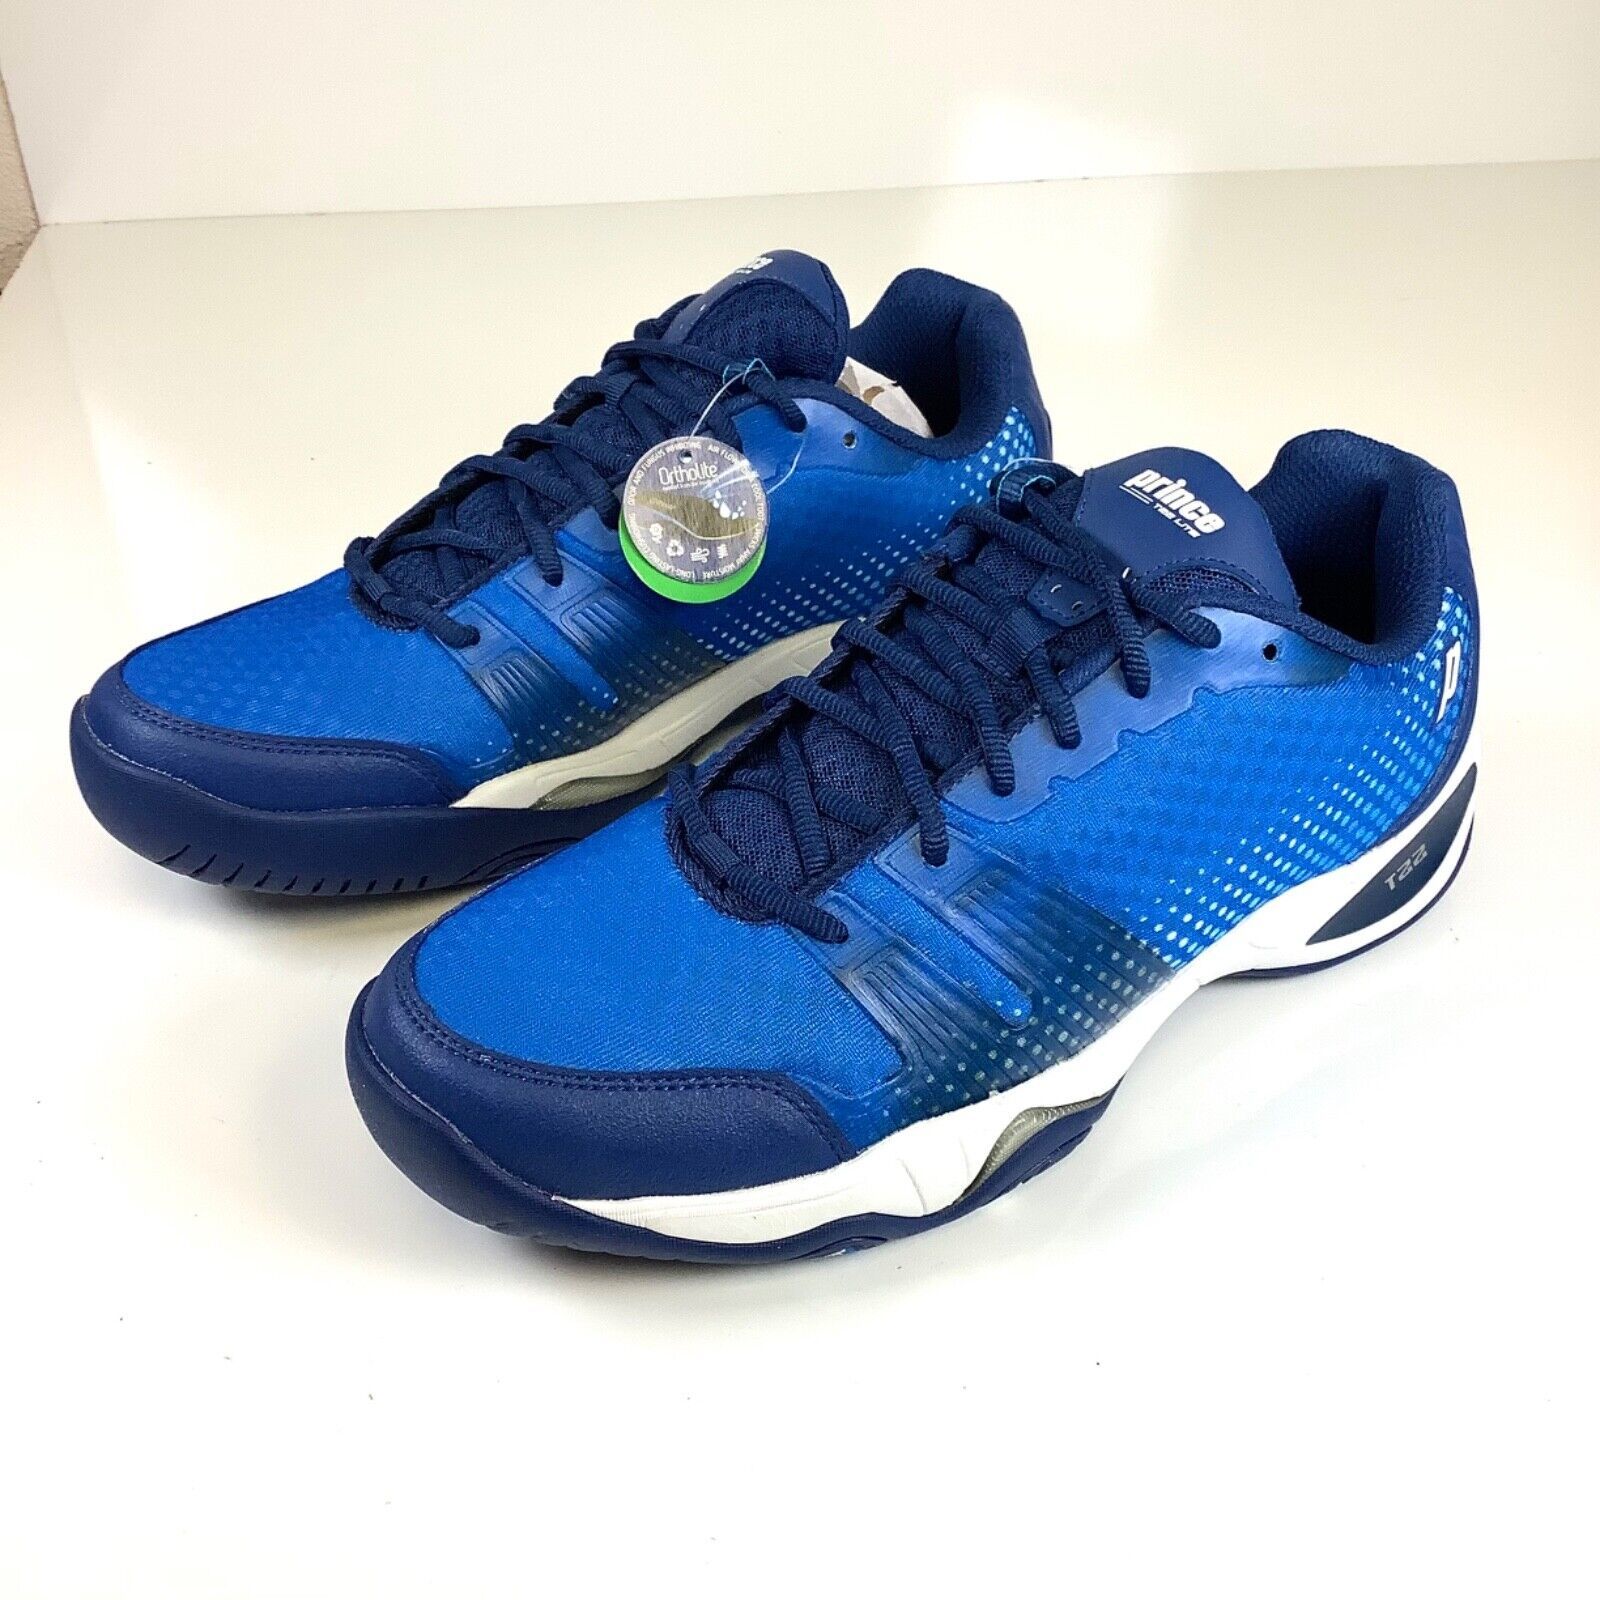 NEW Prince T22 Blue Tennis Shoe Mens US Sz 10.5 NEW w/TAGS - $79.48